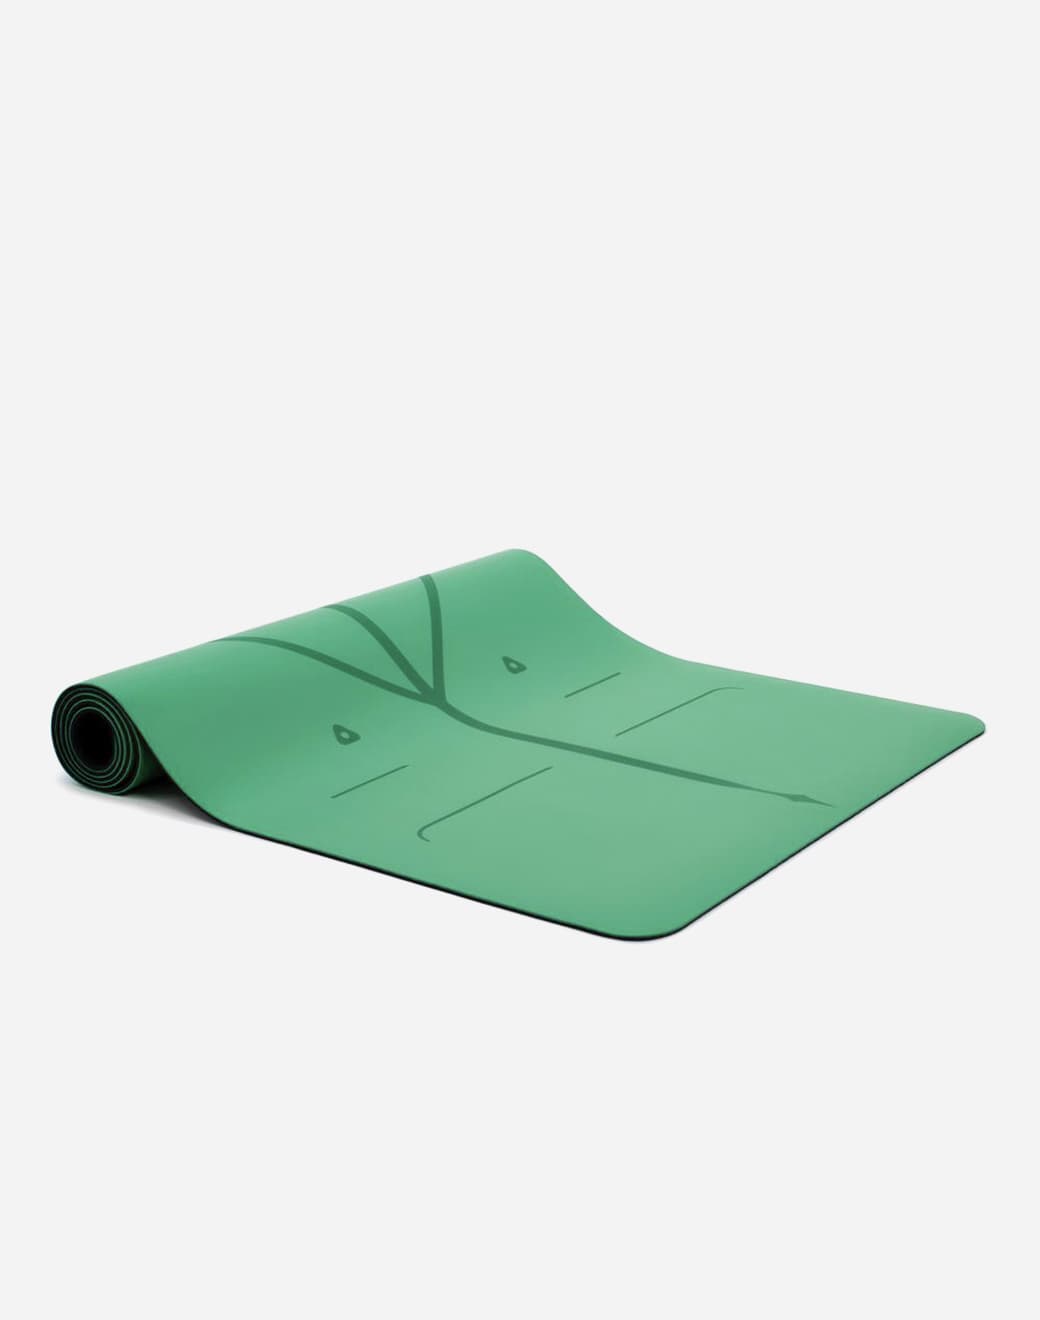 Liforme Green 4.2mm Yoga Matı 4